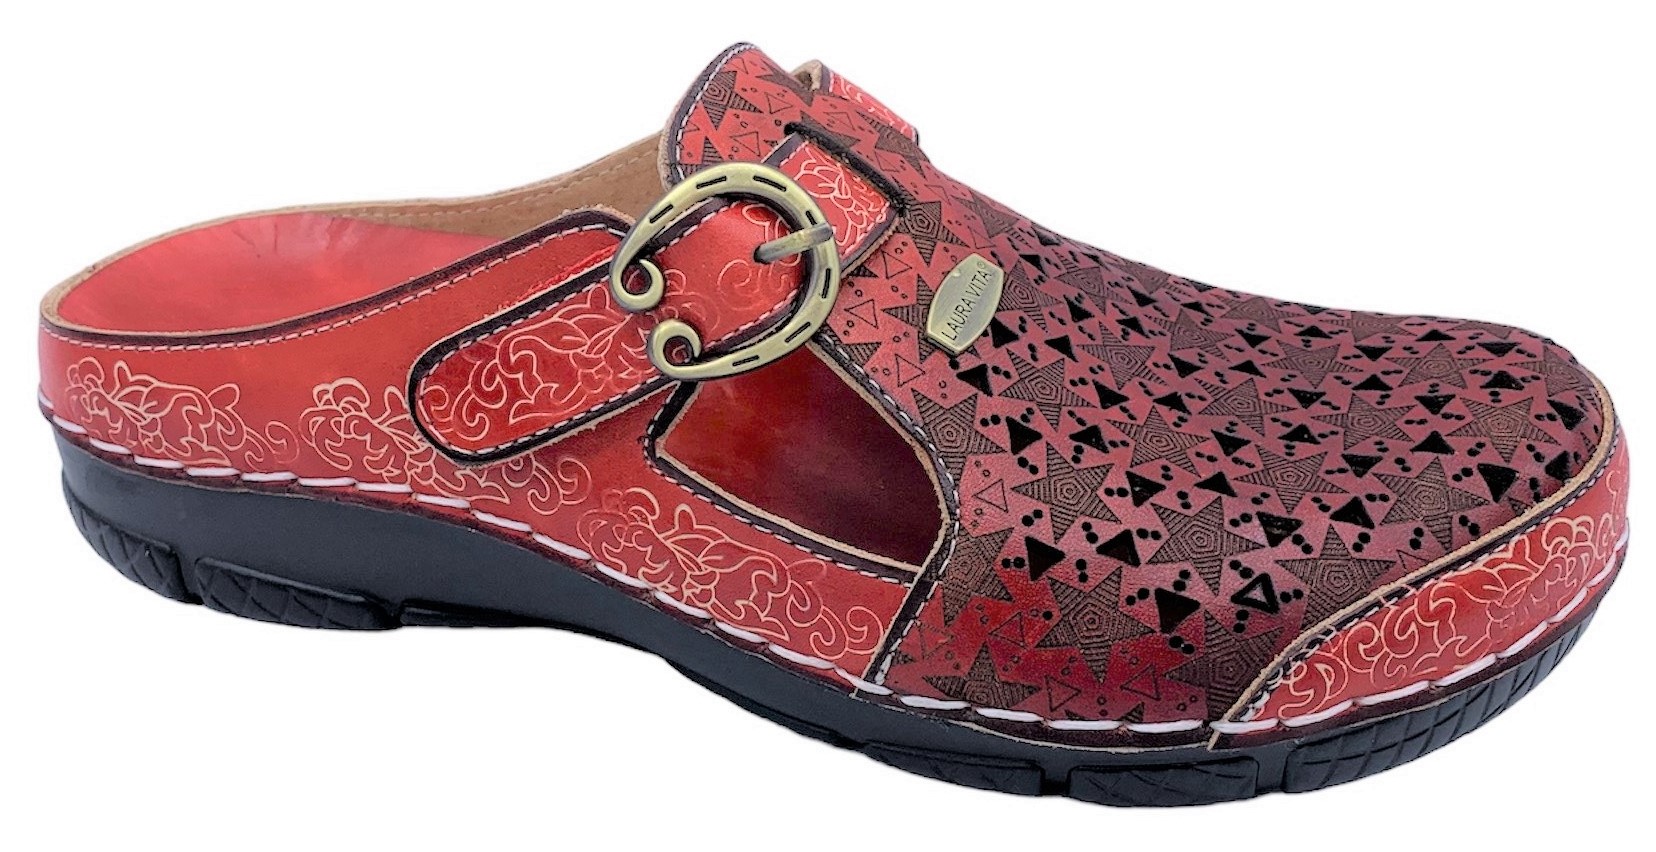 Dámské kožené pantofle Laura Vita 723 červené Velikost: 39 (EU)